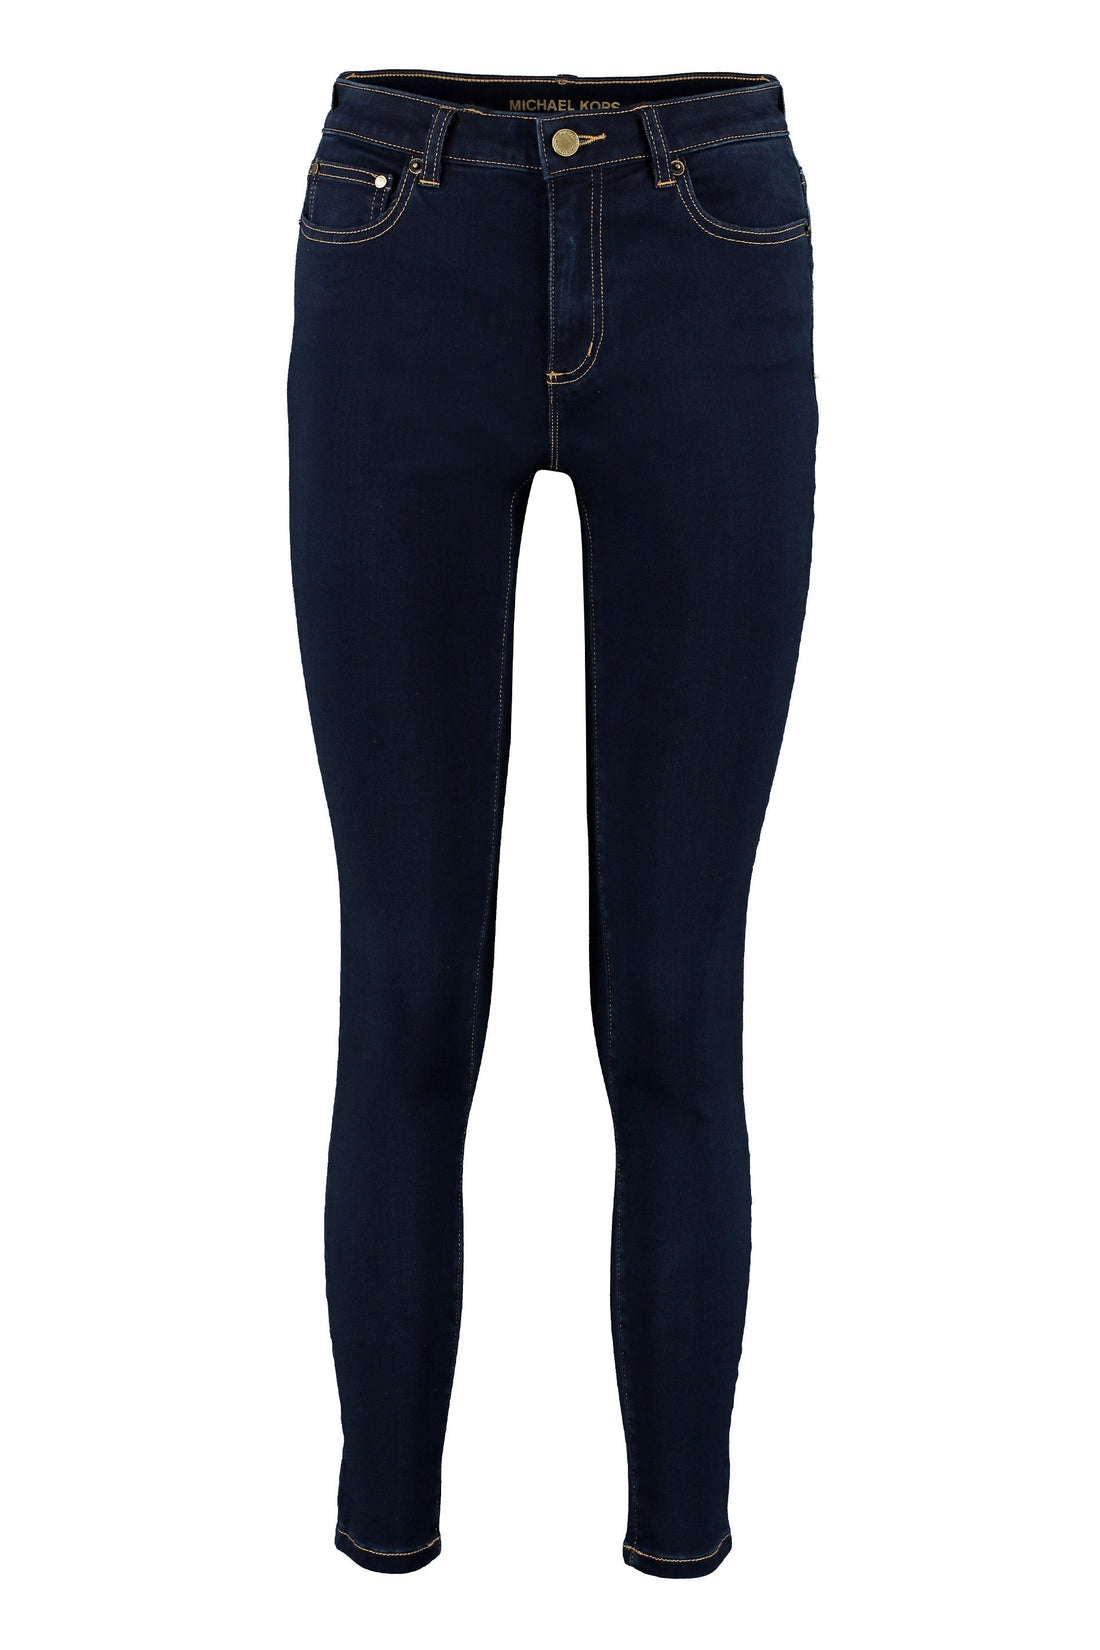 MICHAEL MICHAEL KORS-OUTLET-SALE-5-pocket skinny jeans-ARCHIVIST